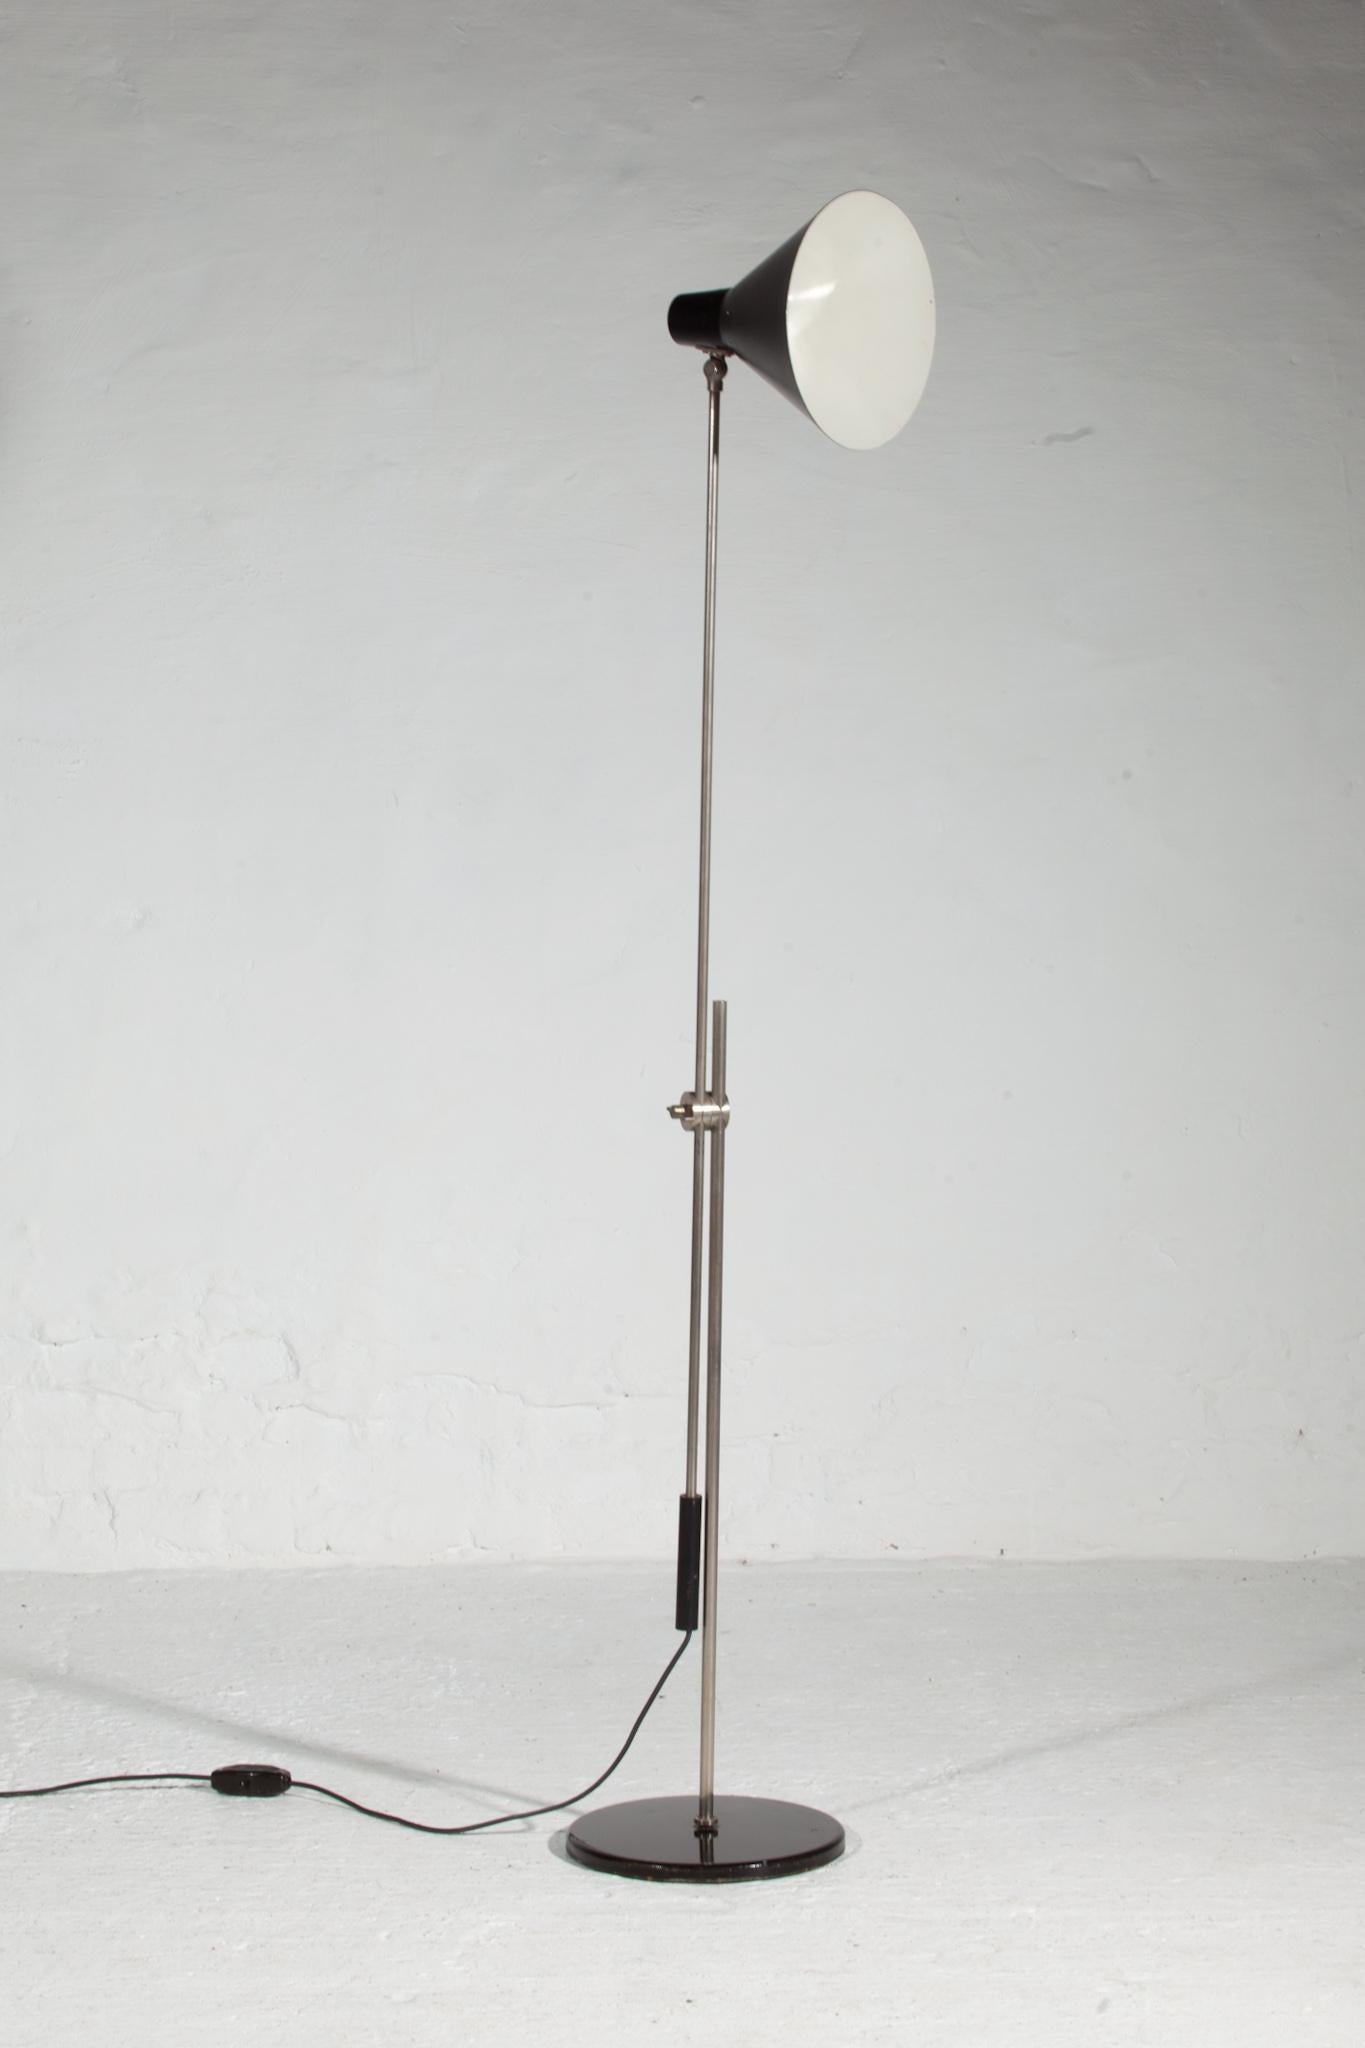 Hand-Crafted Adjustable Floorlamp Model ST416 by H. Fillekes for Artiforte, Dutch Original